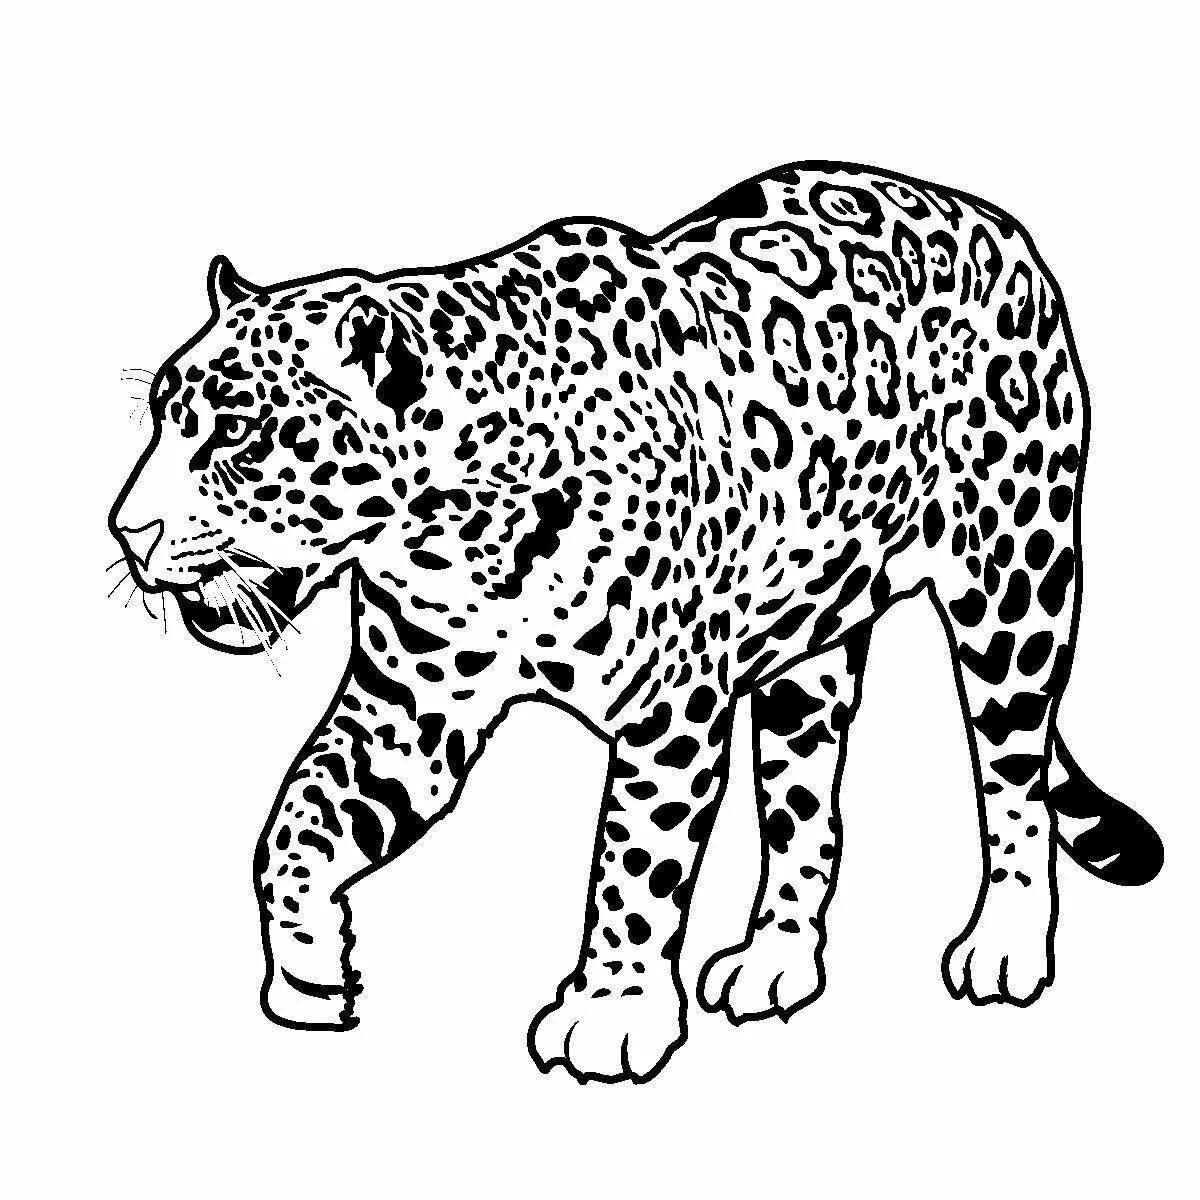 Coloring book nice jaguar animal